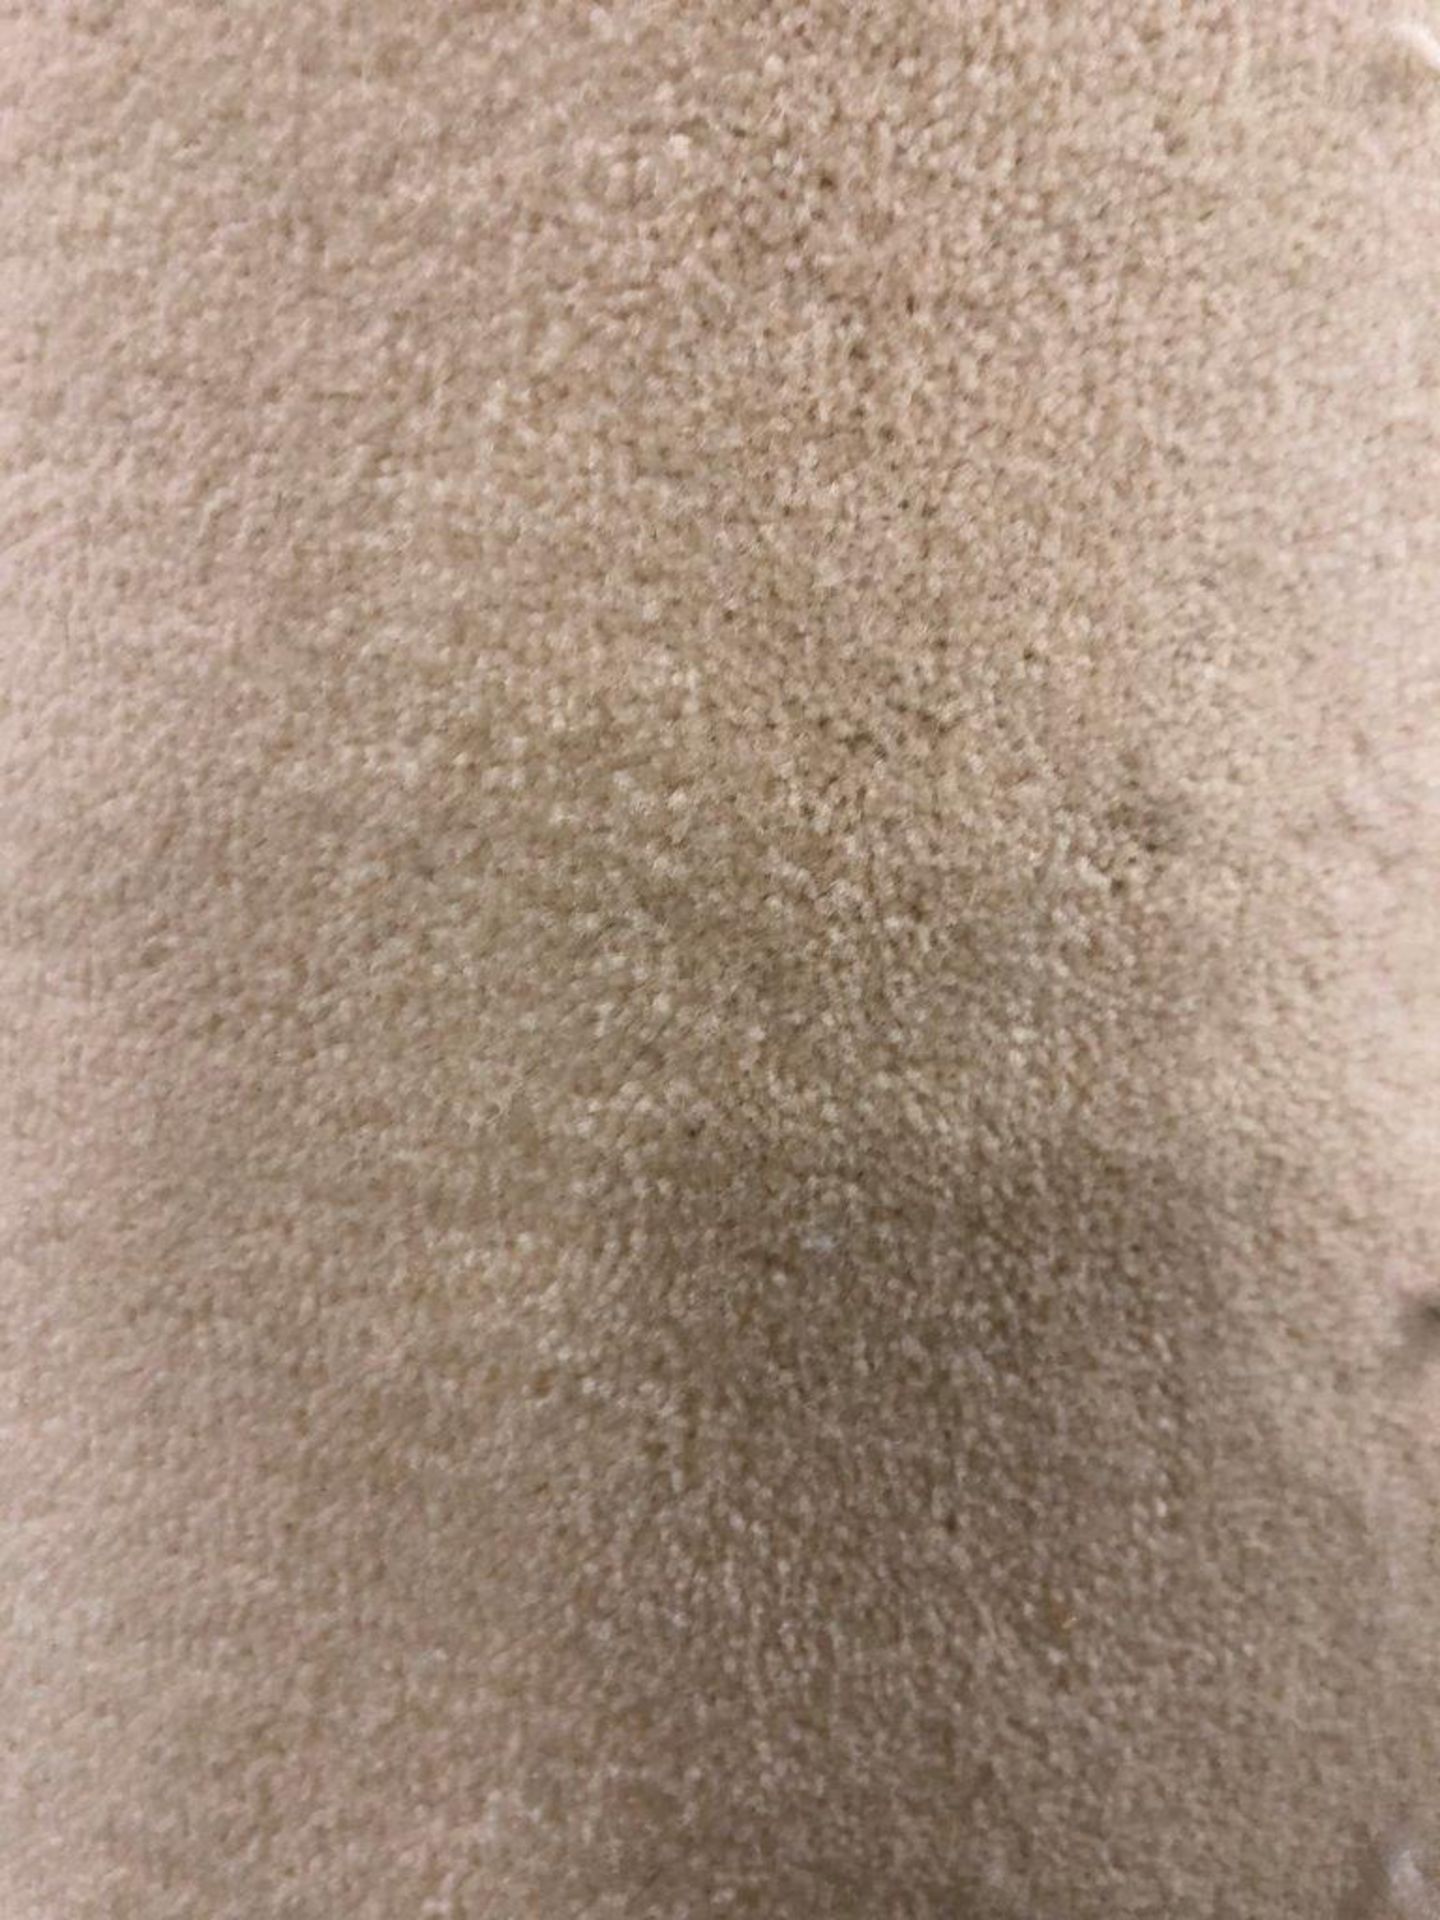 1 x Ryalux Carpet End Roll - Cream 4.2x2.3m2 - Image 3 of 3